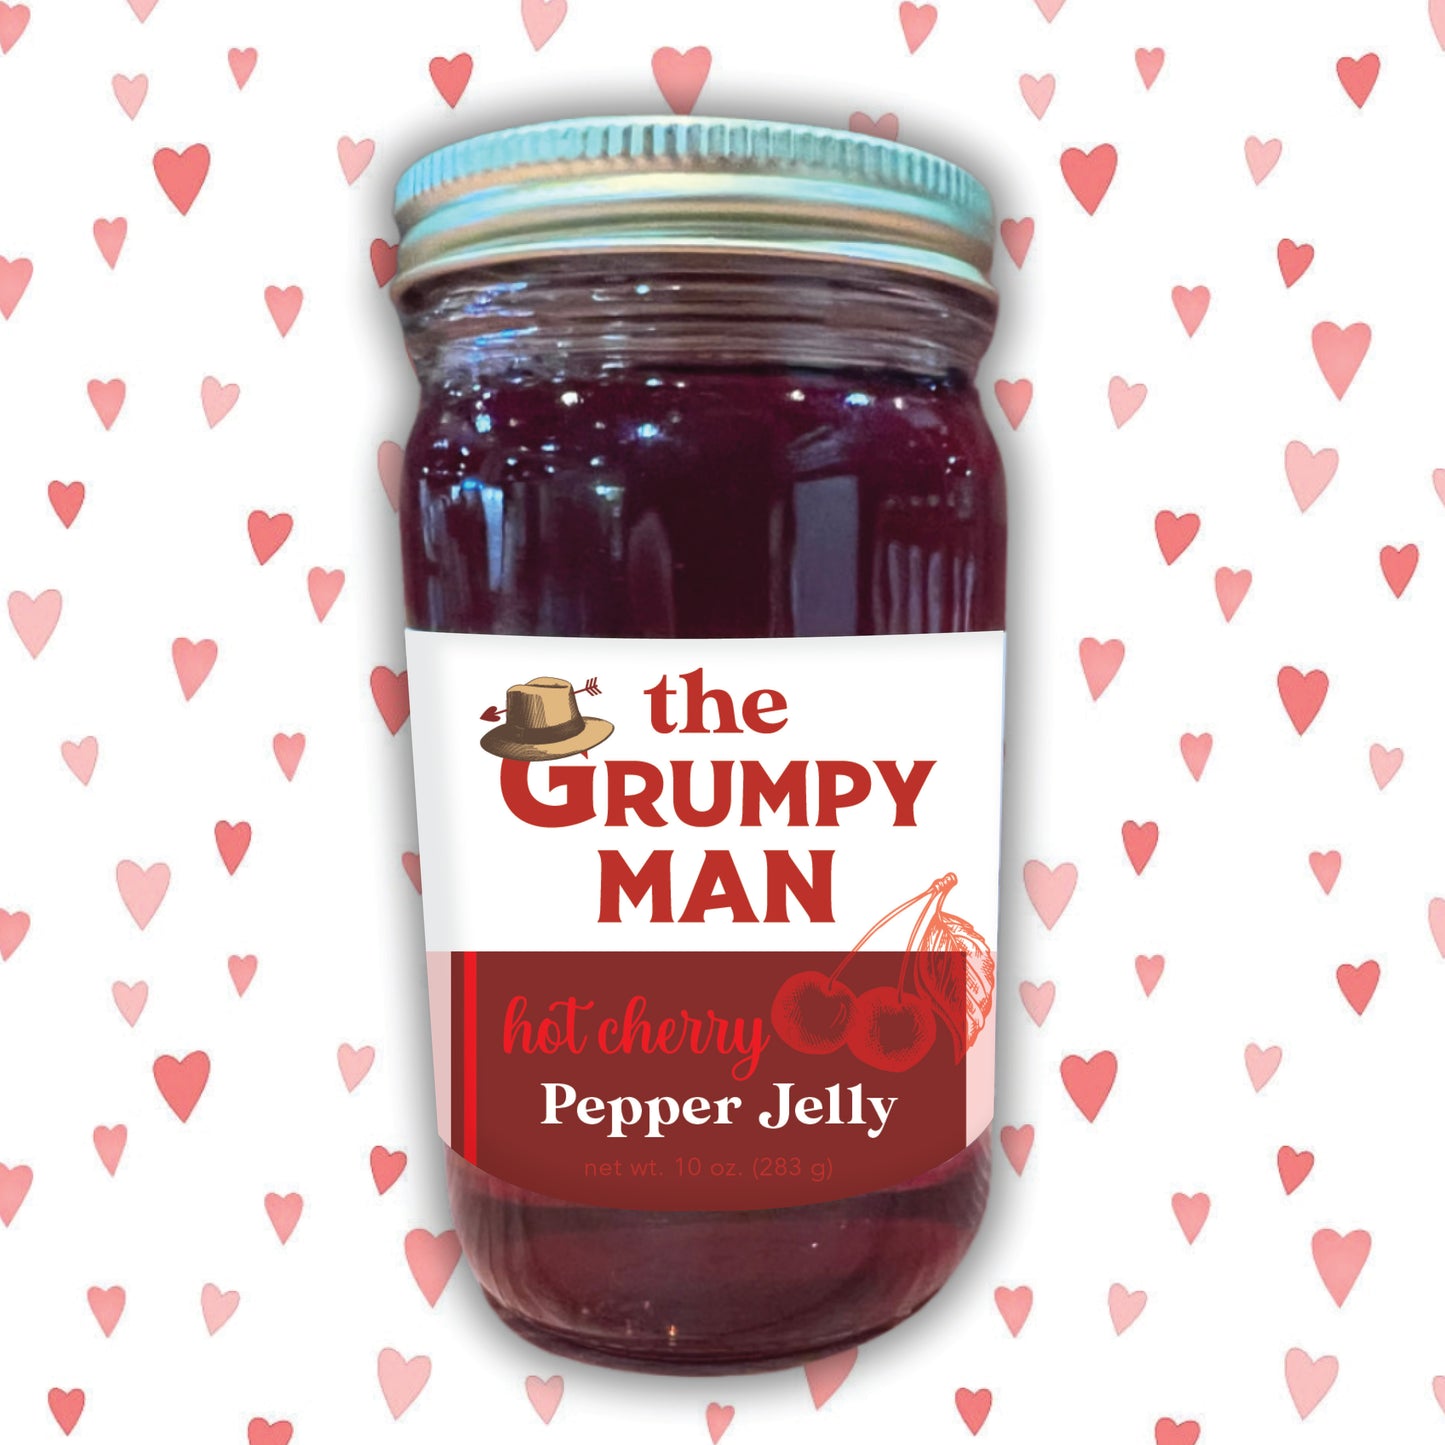 Hot Cherry Pepper Jelly